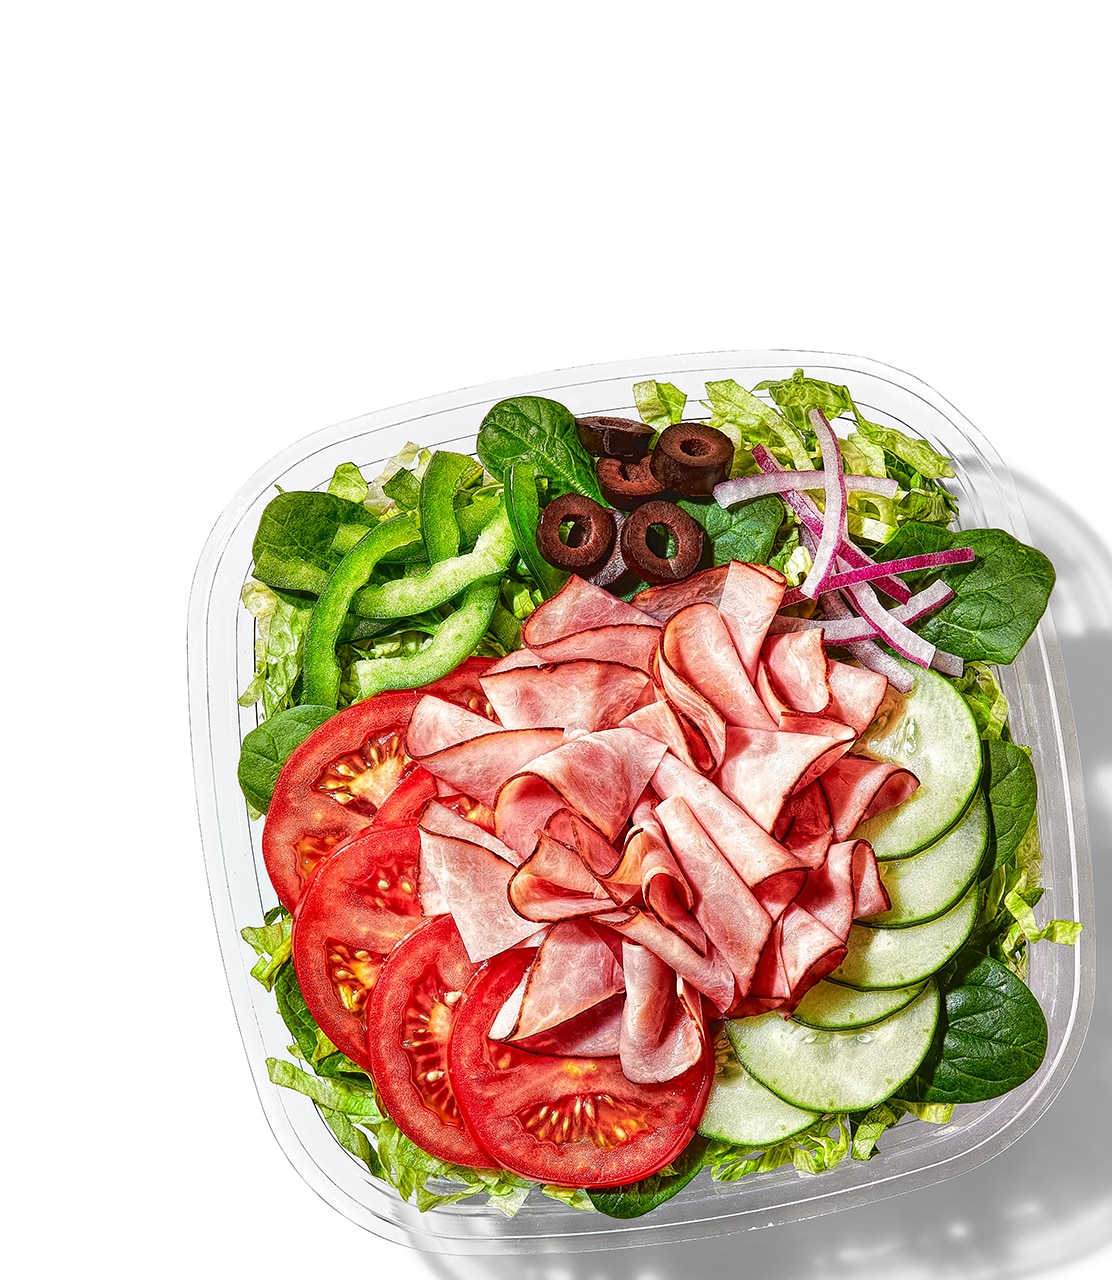 Calories in Subway Black Forest Ham Salad